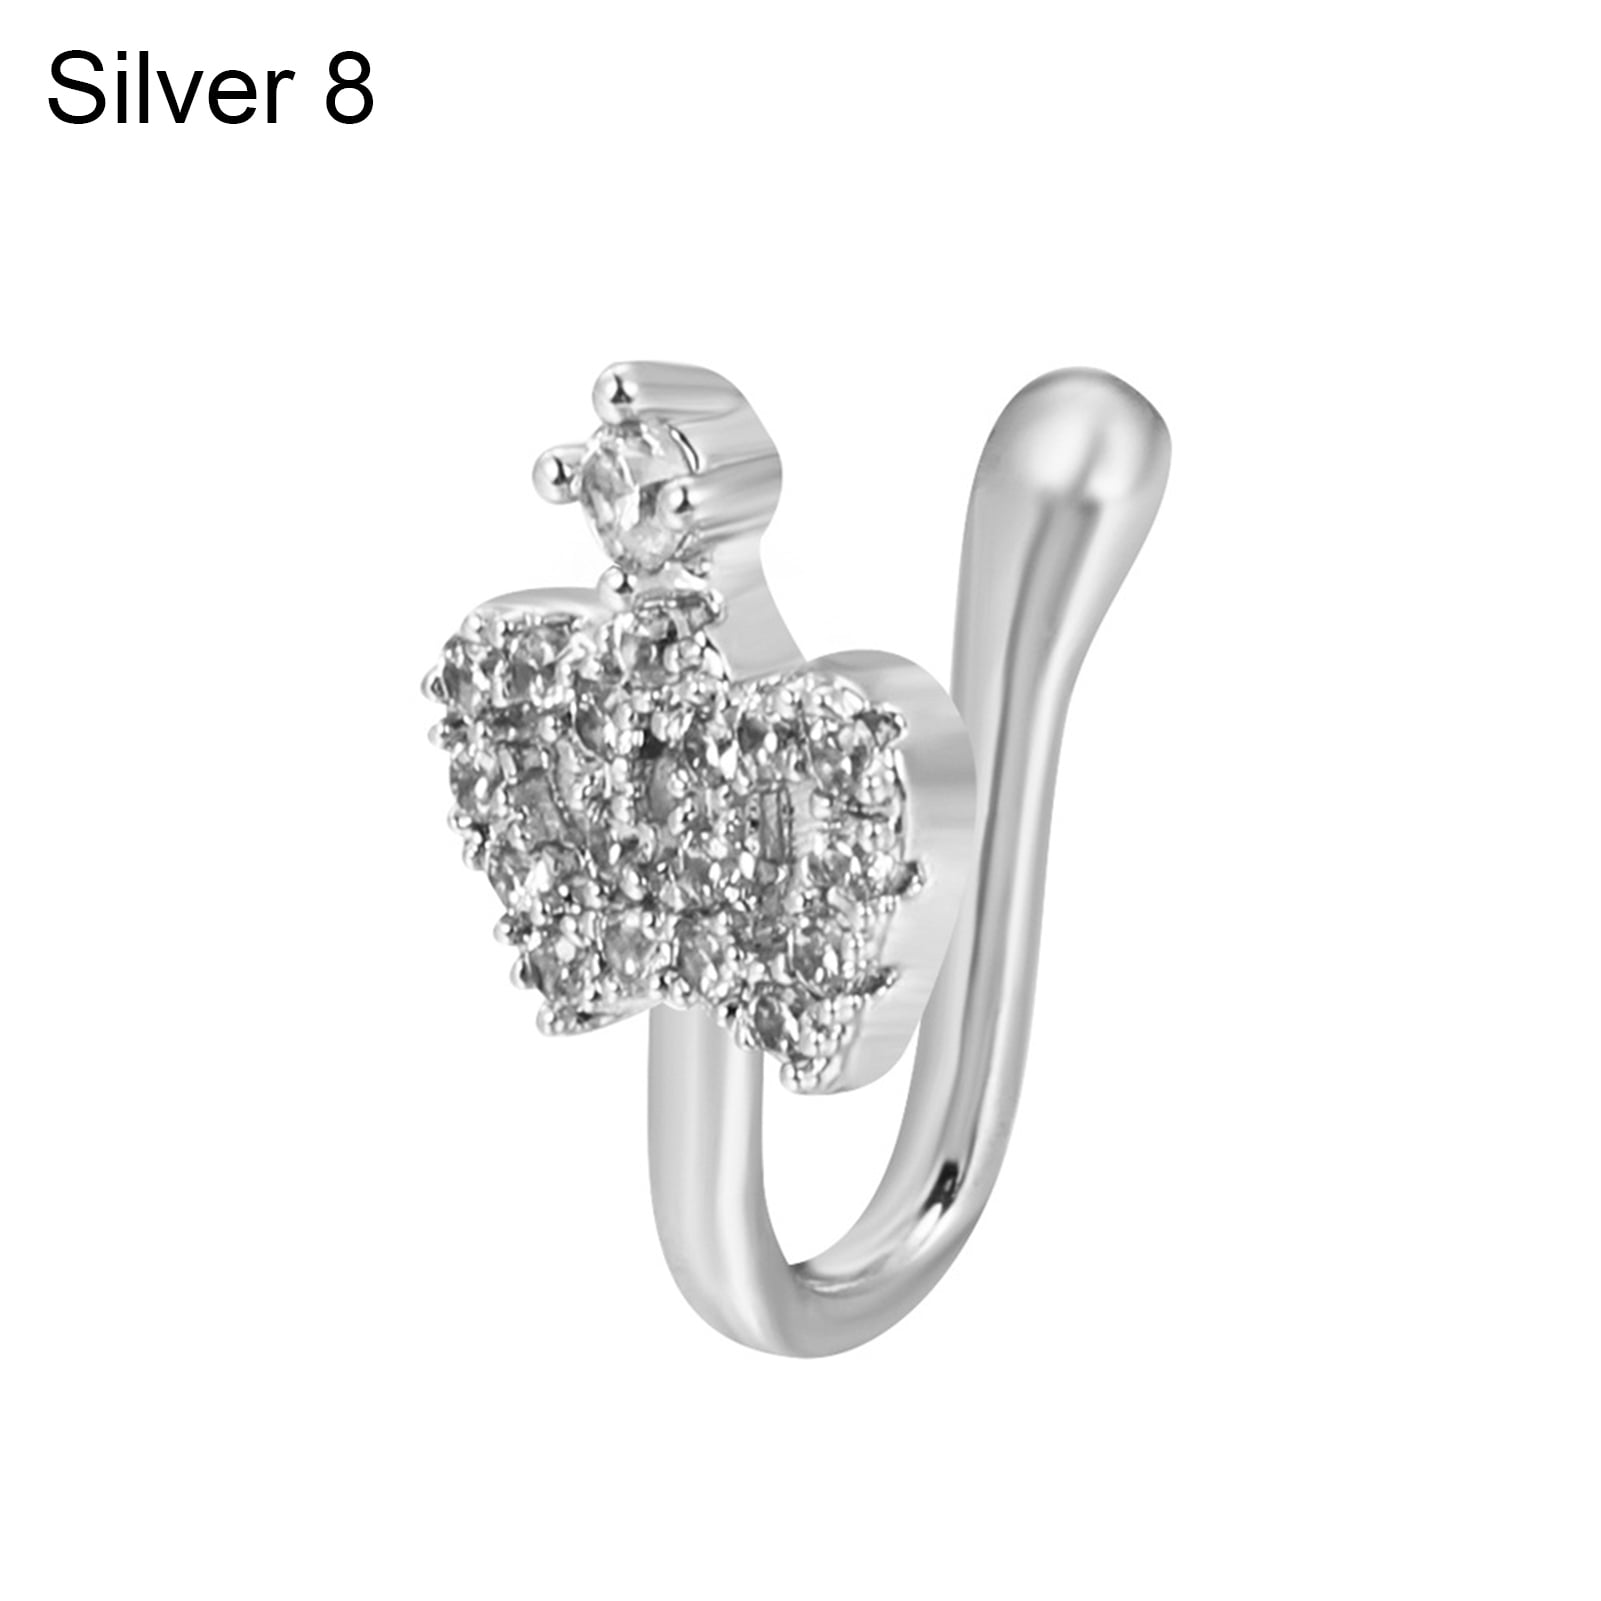 Platinum Ring Nosepin - Buy Platinum Ring Nosepin online in India